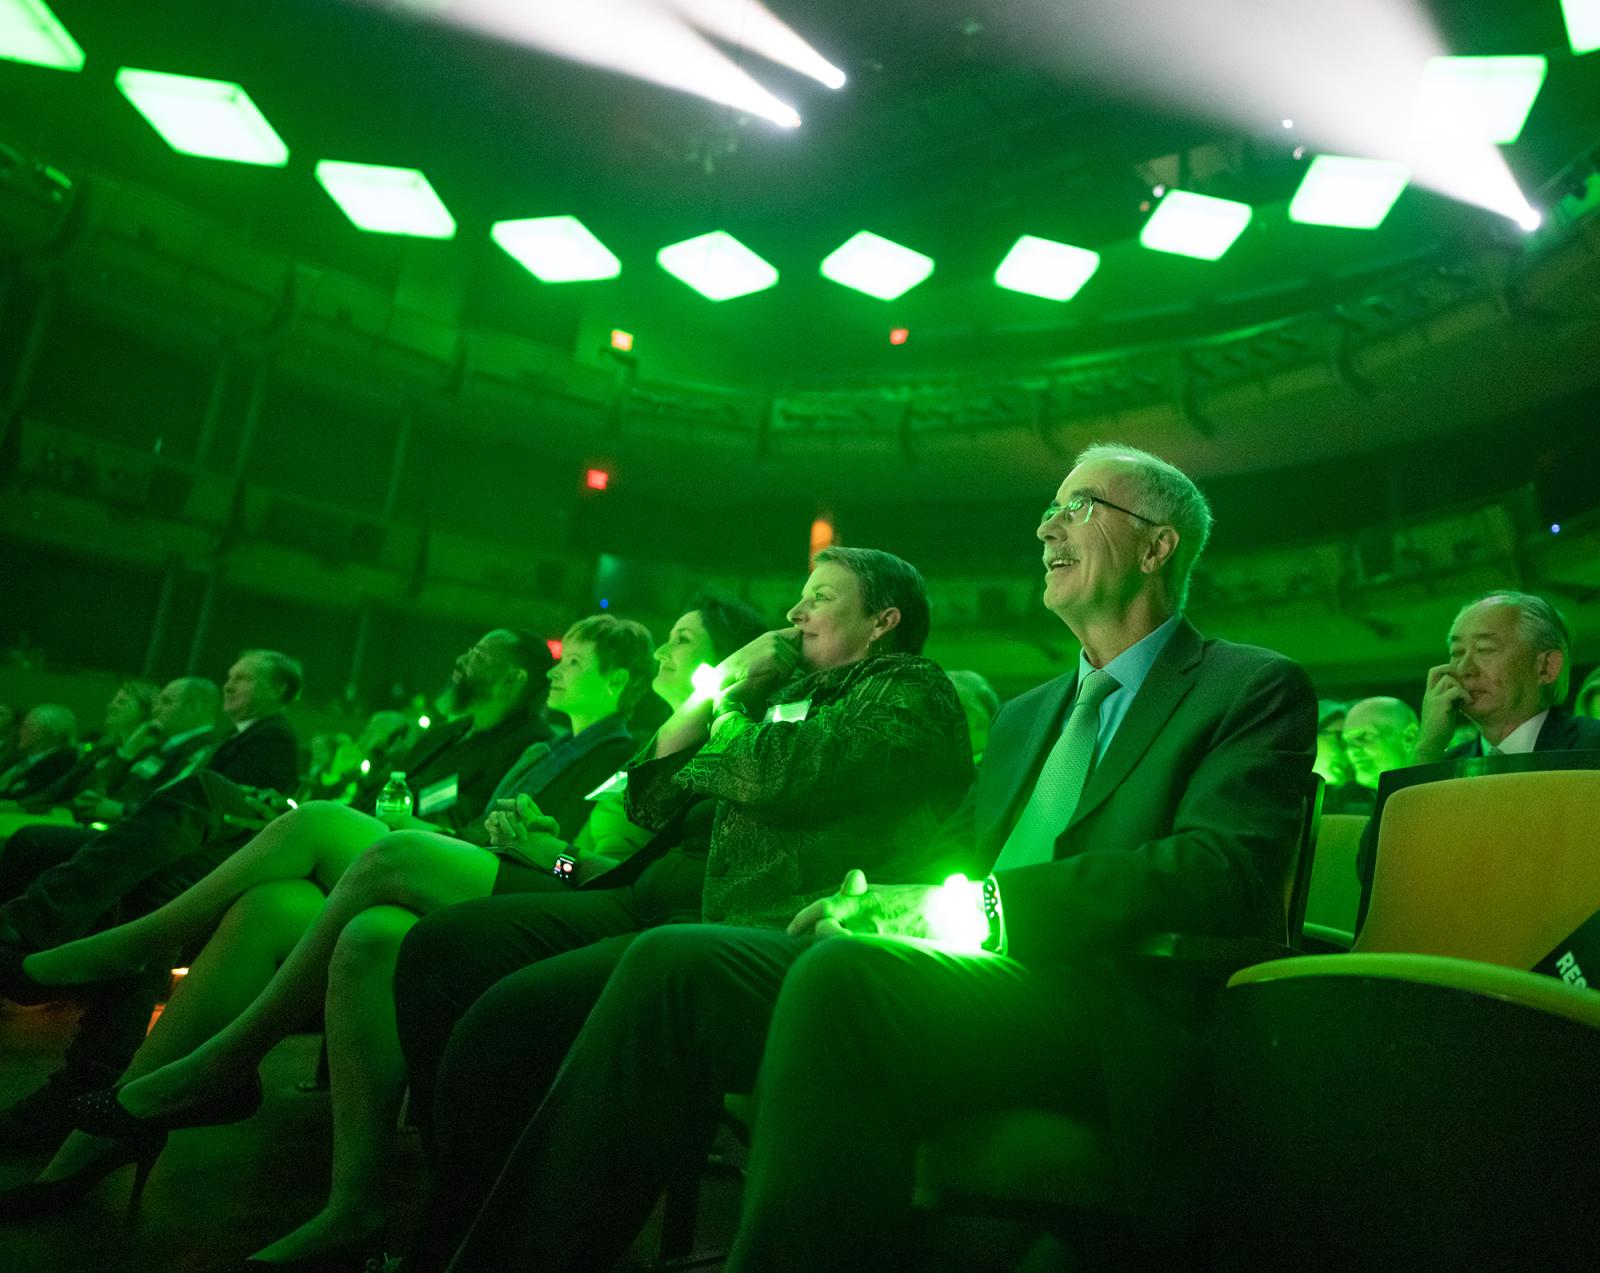 President Hanlon sitting with a glowing green wristband